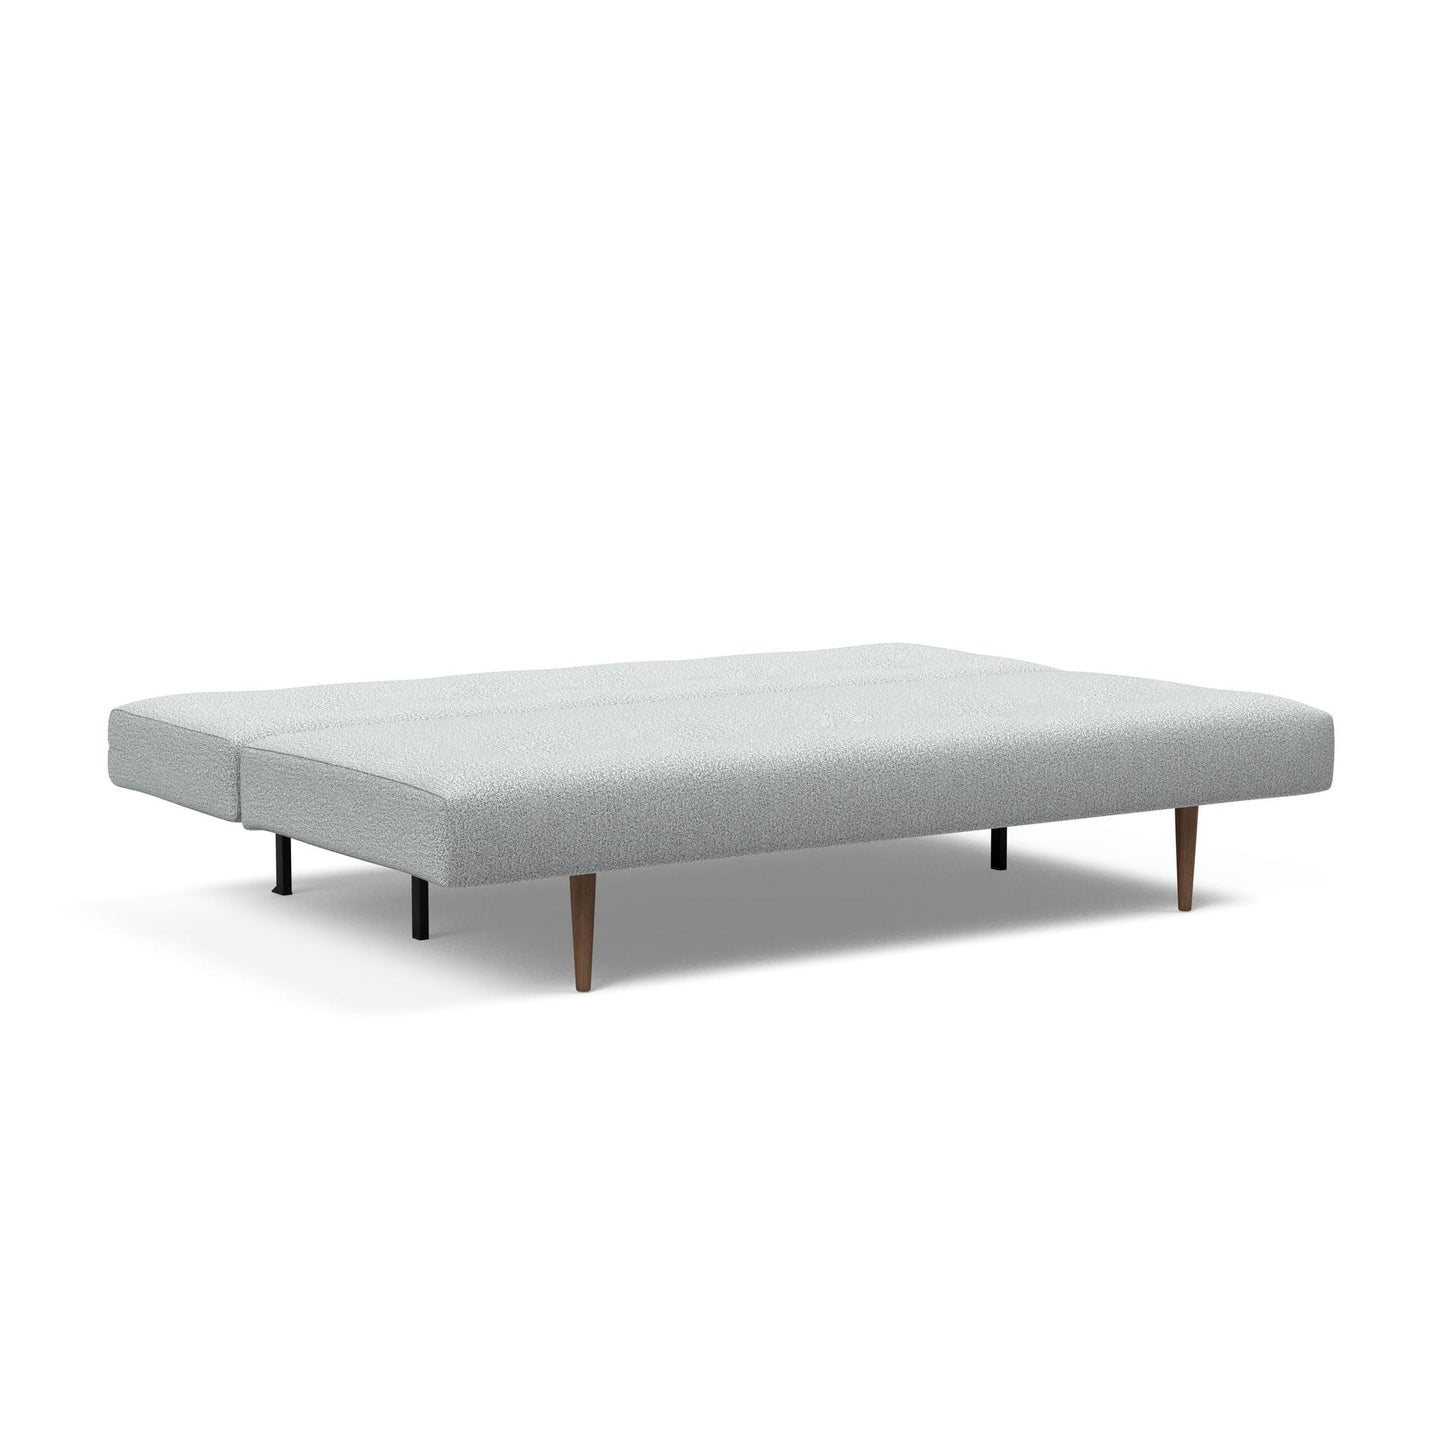 Recast Plus Sofa Bed in Melange Light Gray